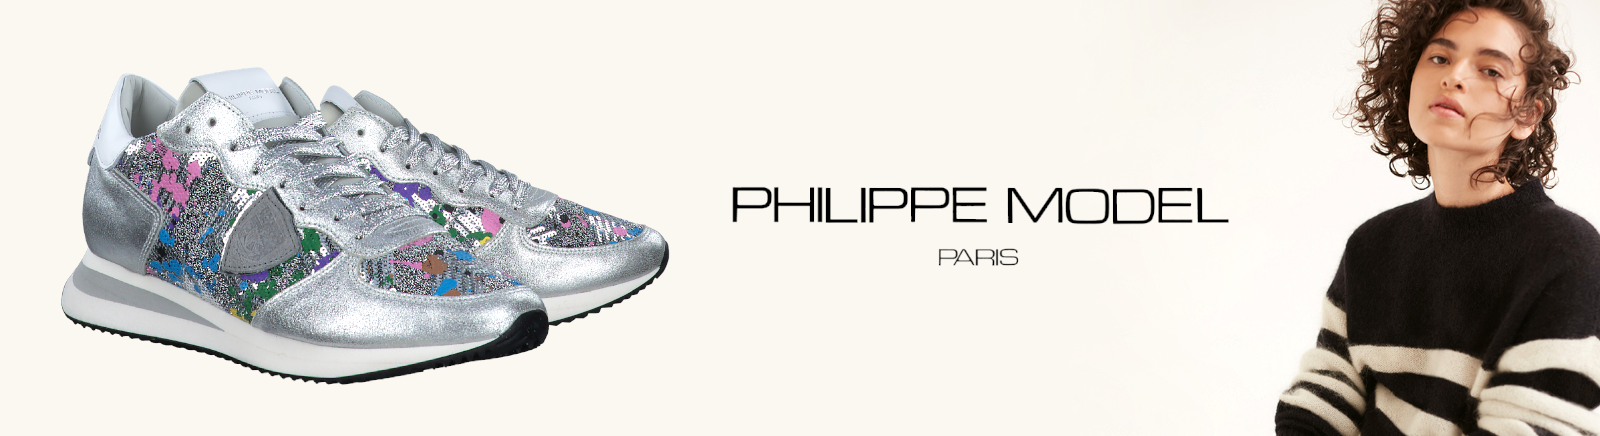 PHILIPPE MODEL Schuhe online bestellen im Juppen Shop